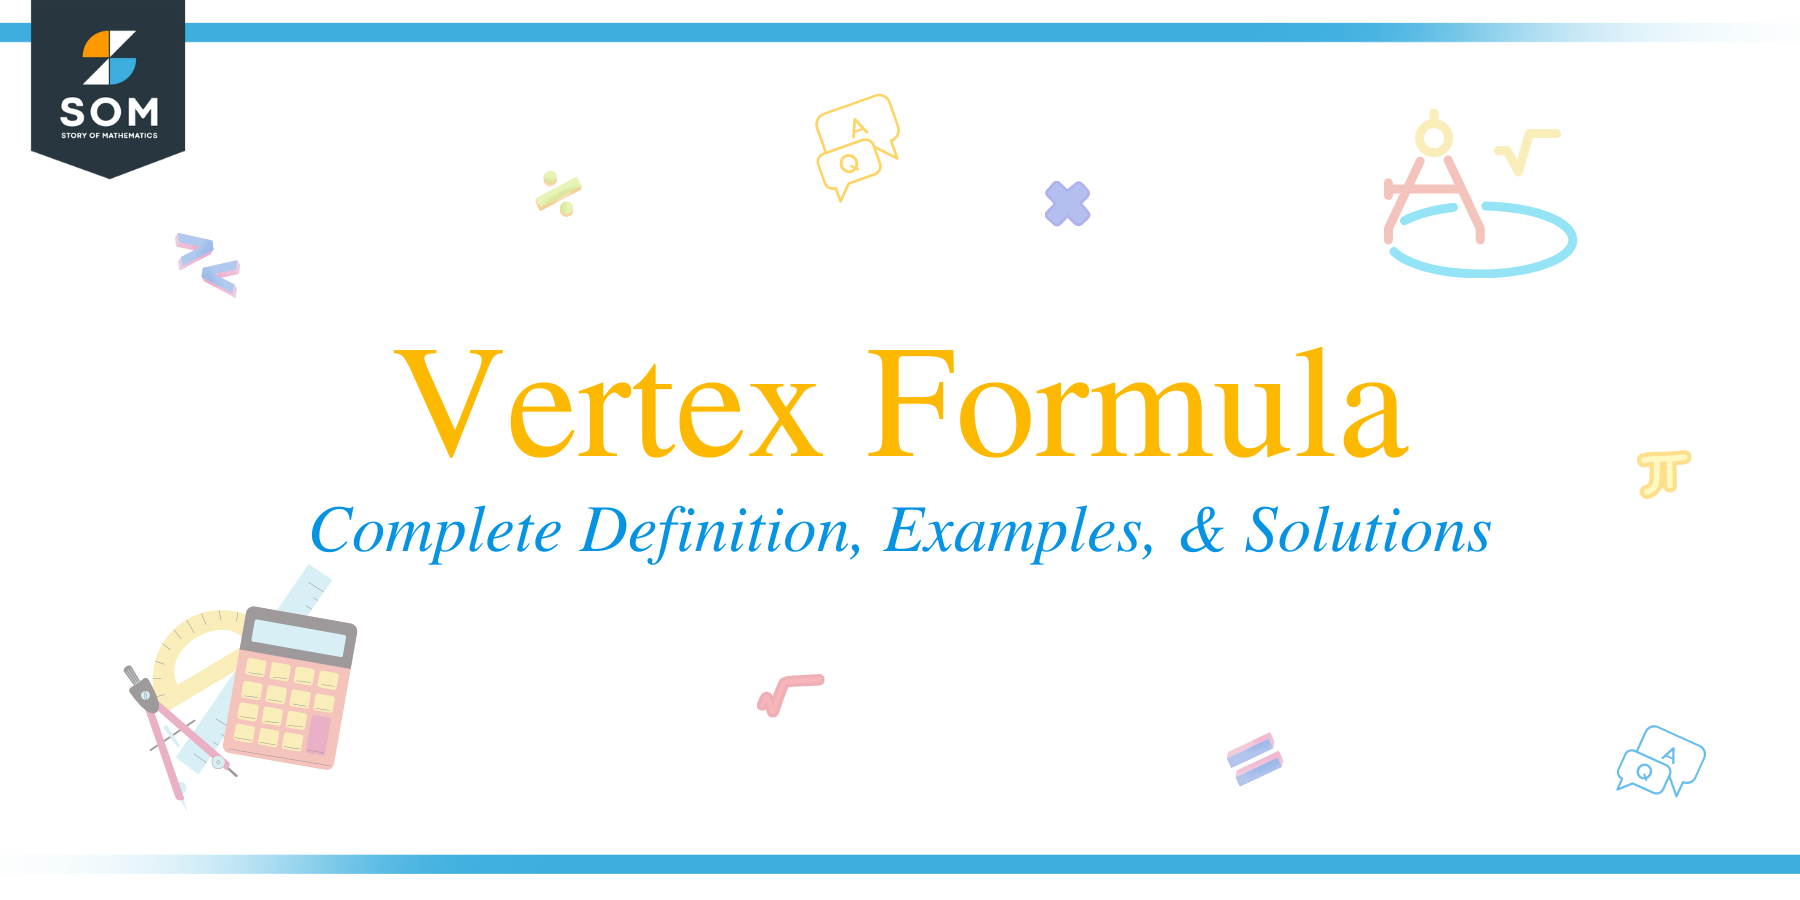 Vertex Formula